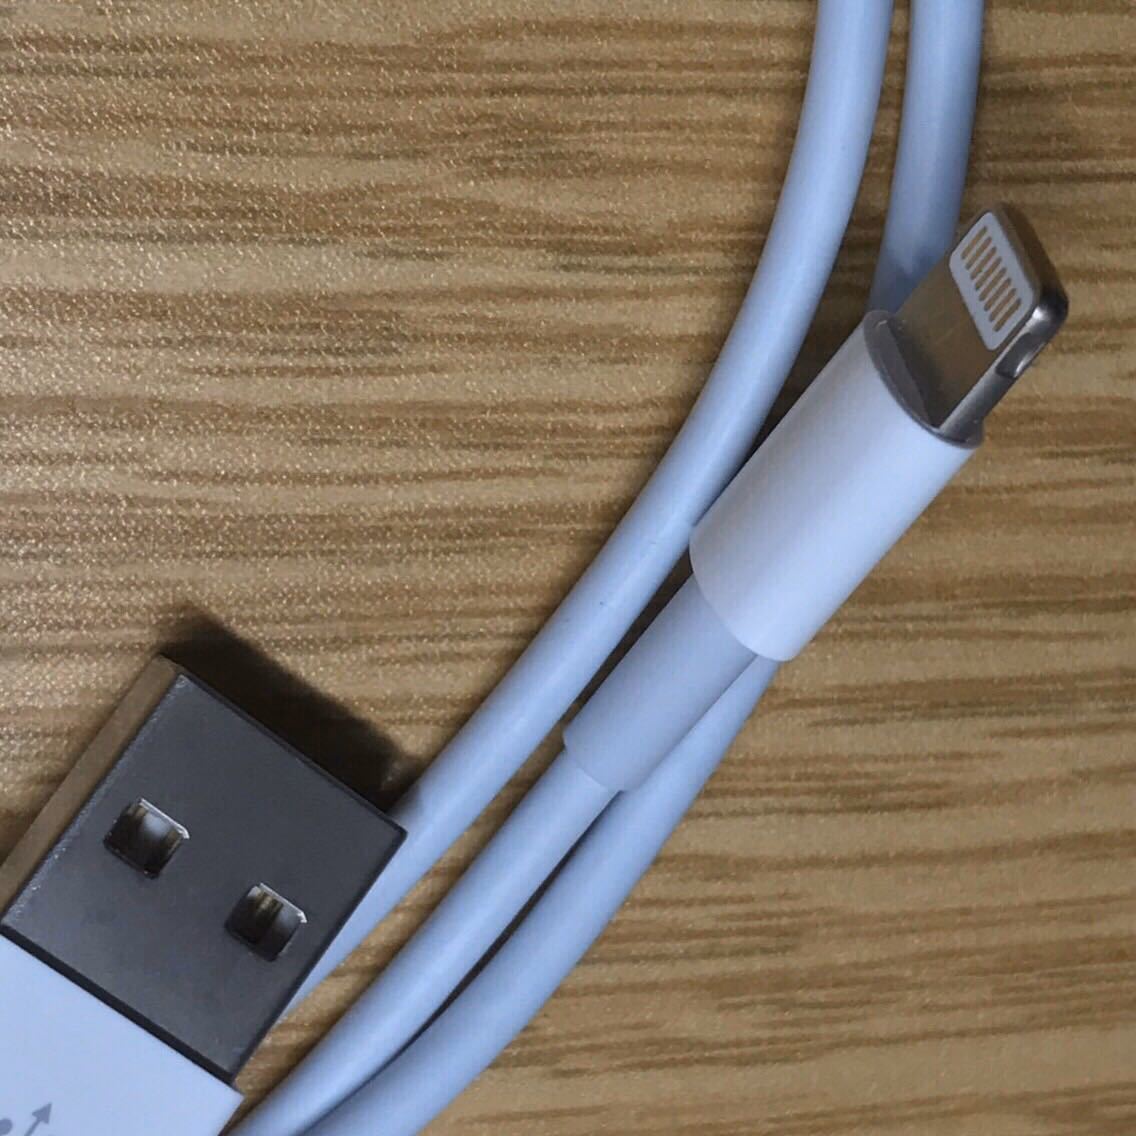 USBケーブル iPhone 充電器 充電ケーブル コード lightning cable ライトニングケーブル 急速充電 高速充電 データ転送